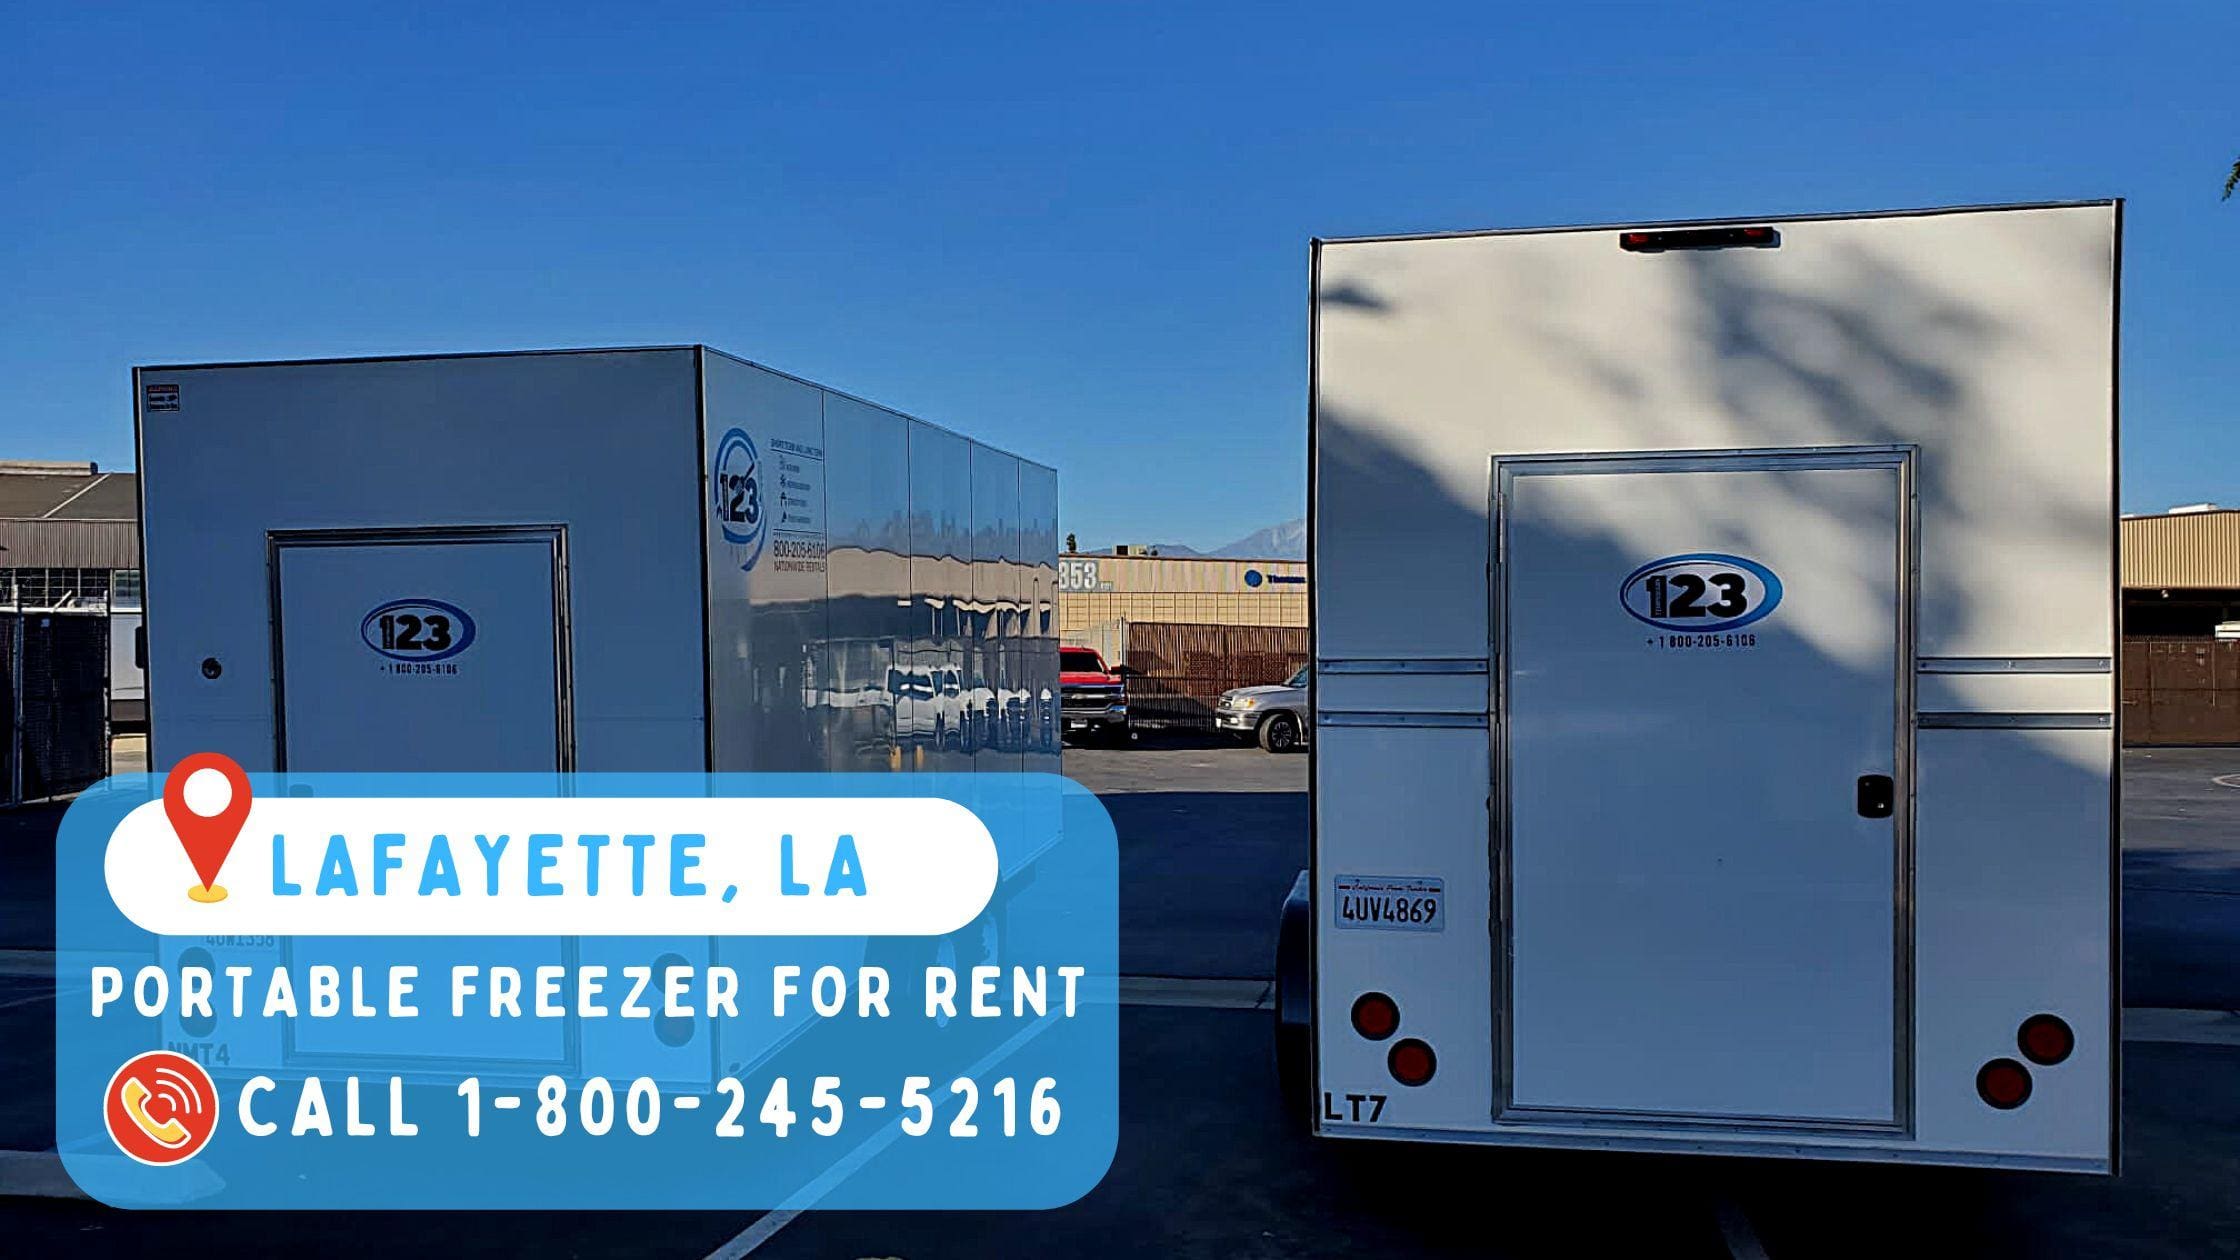 Portable freezer for rent in Lafayette, LA